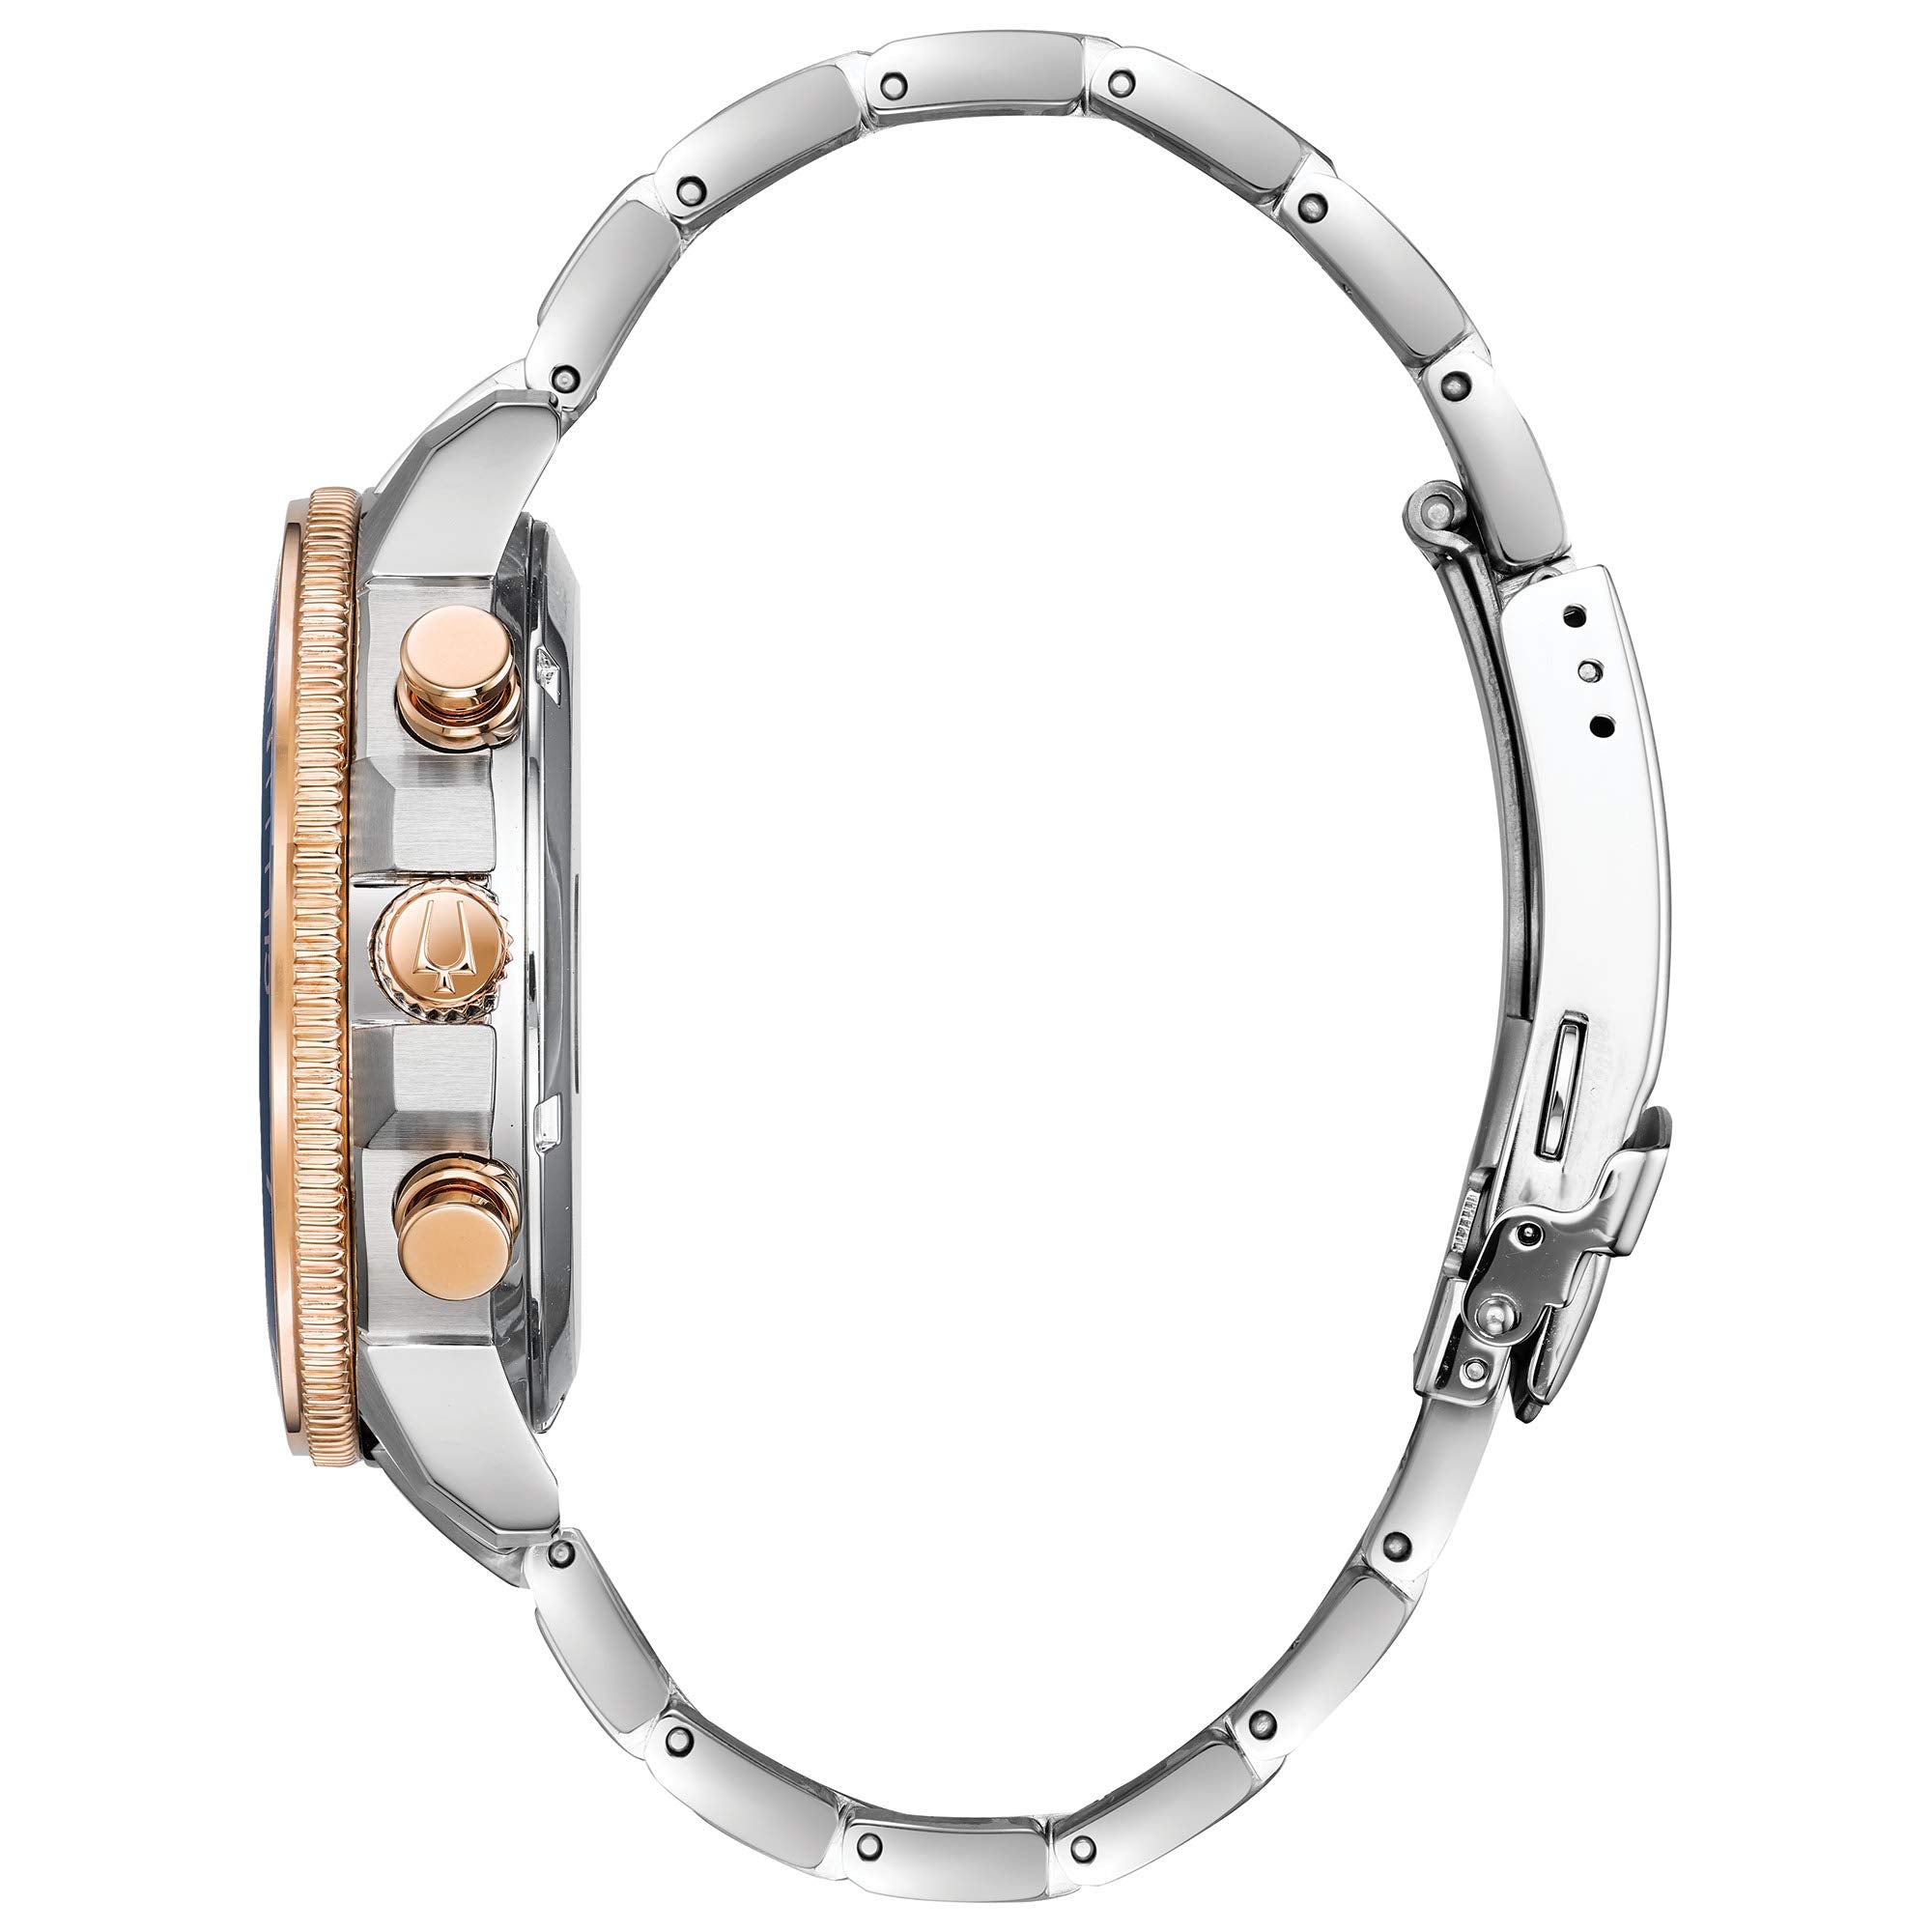 Bulova Marine Star Stainless Steel Chronograph Watch on Bracelet - 98B301